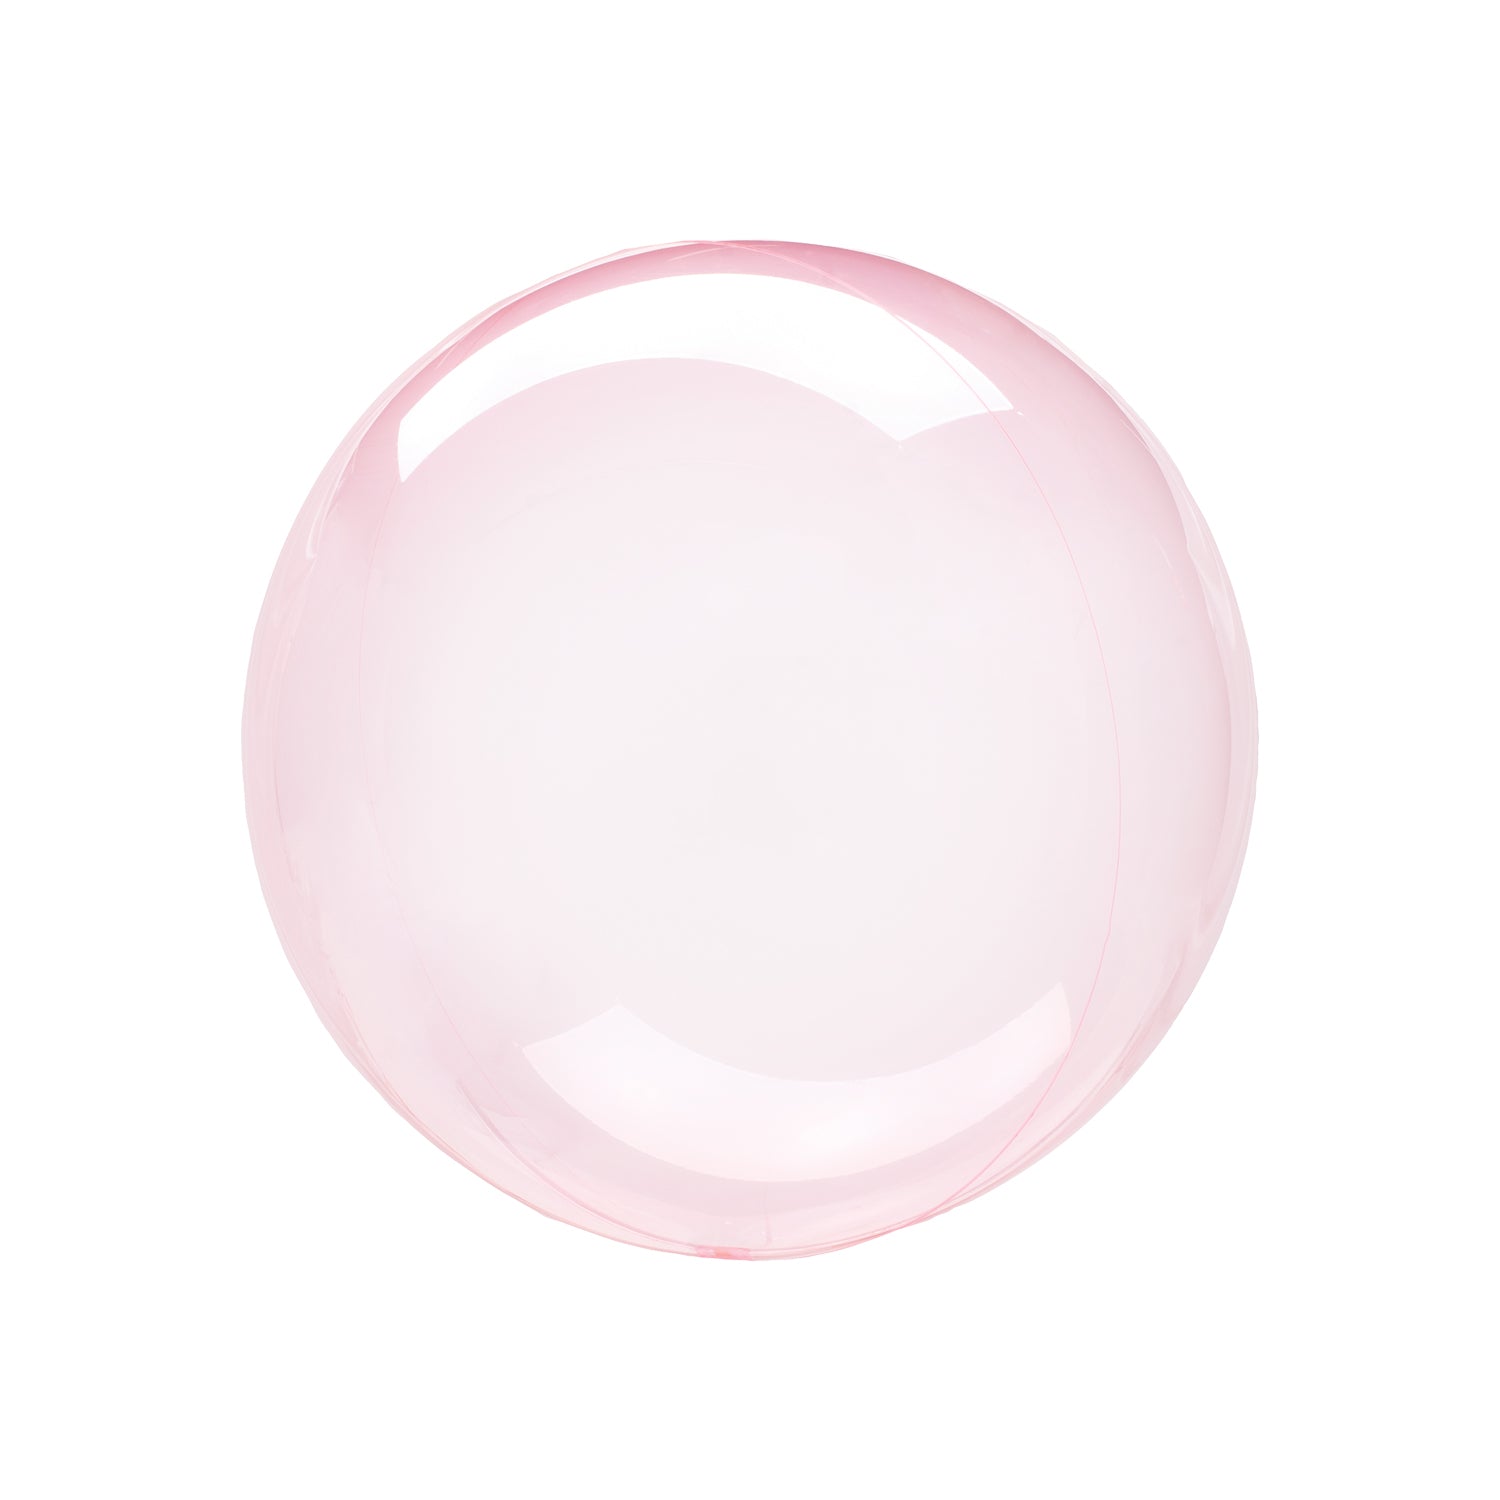 Colored sphere soap bubbles S15